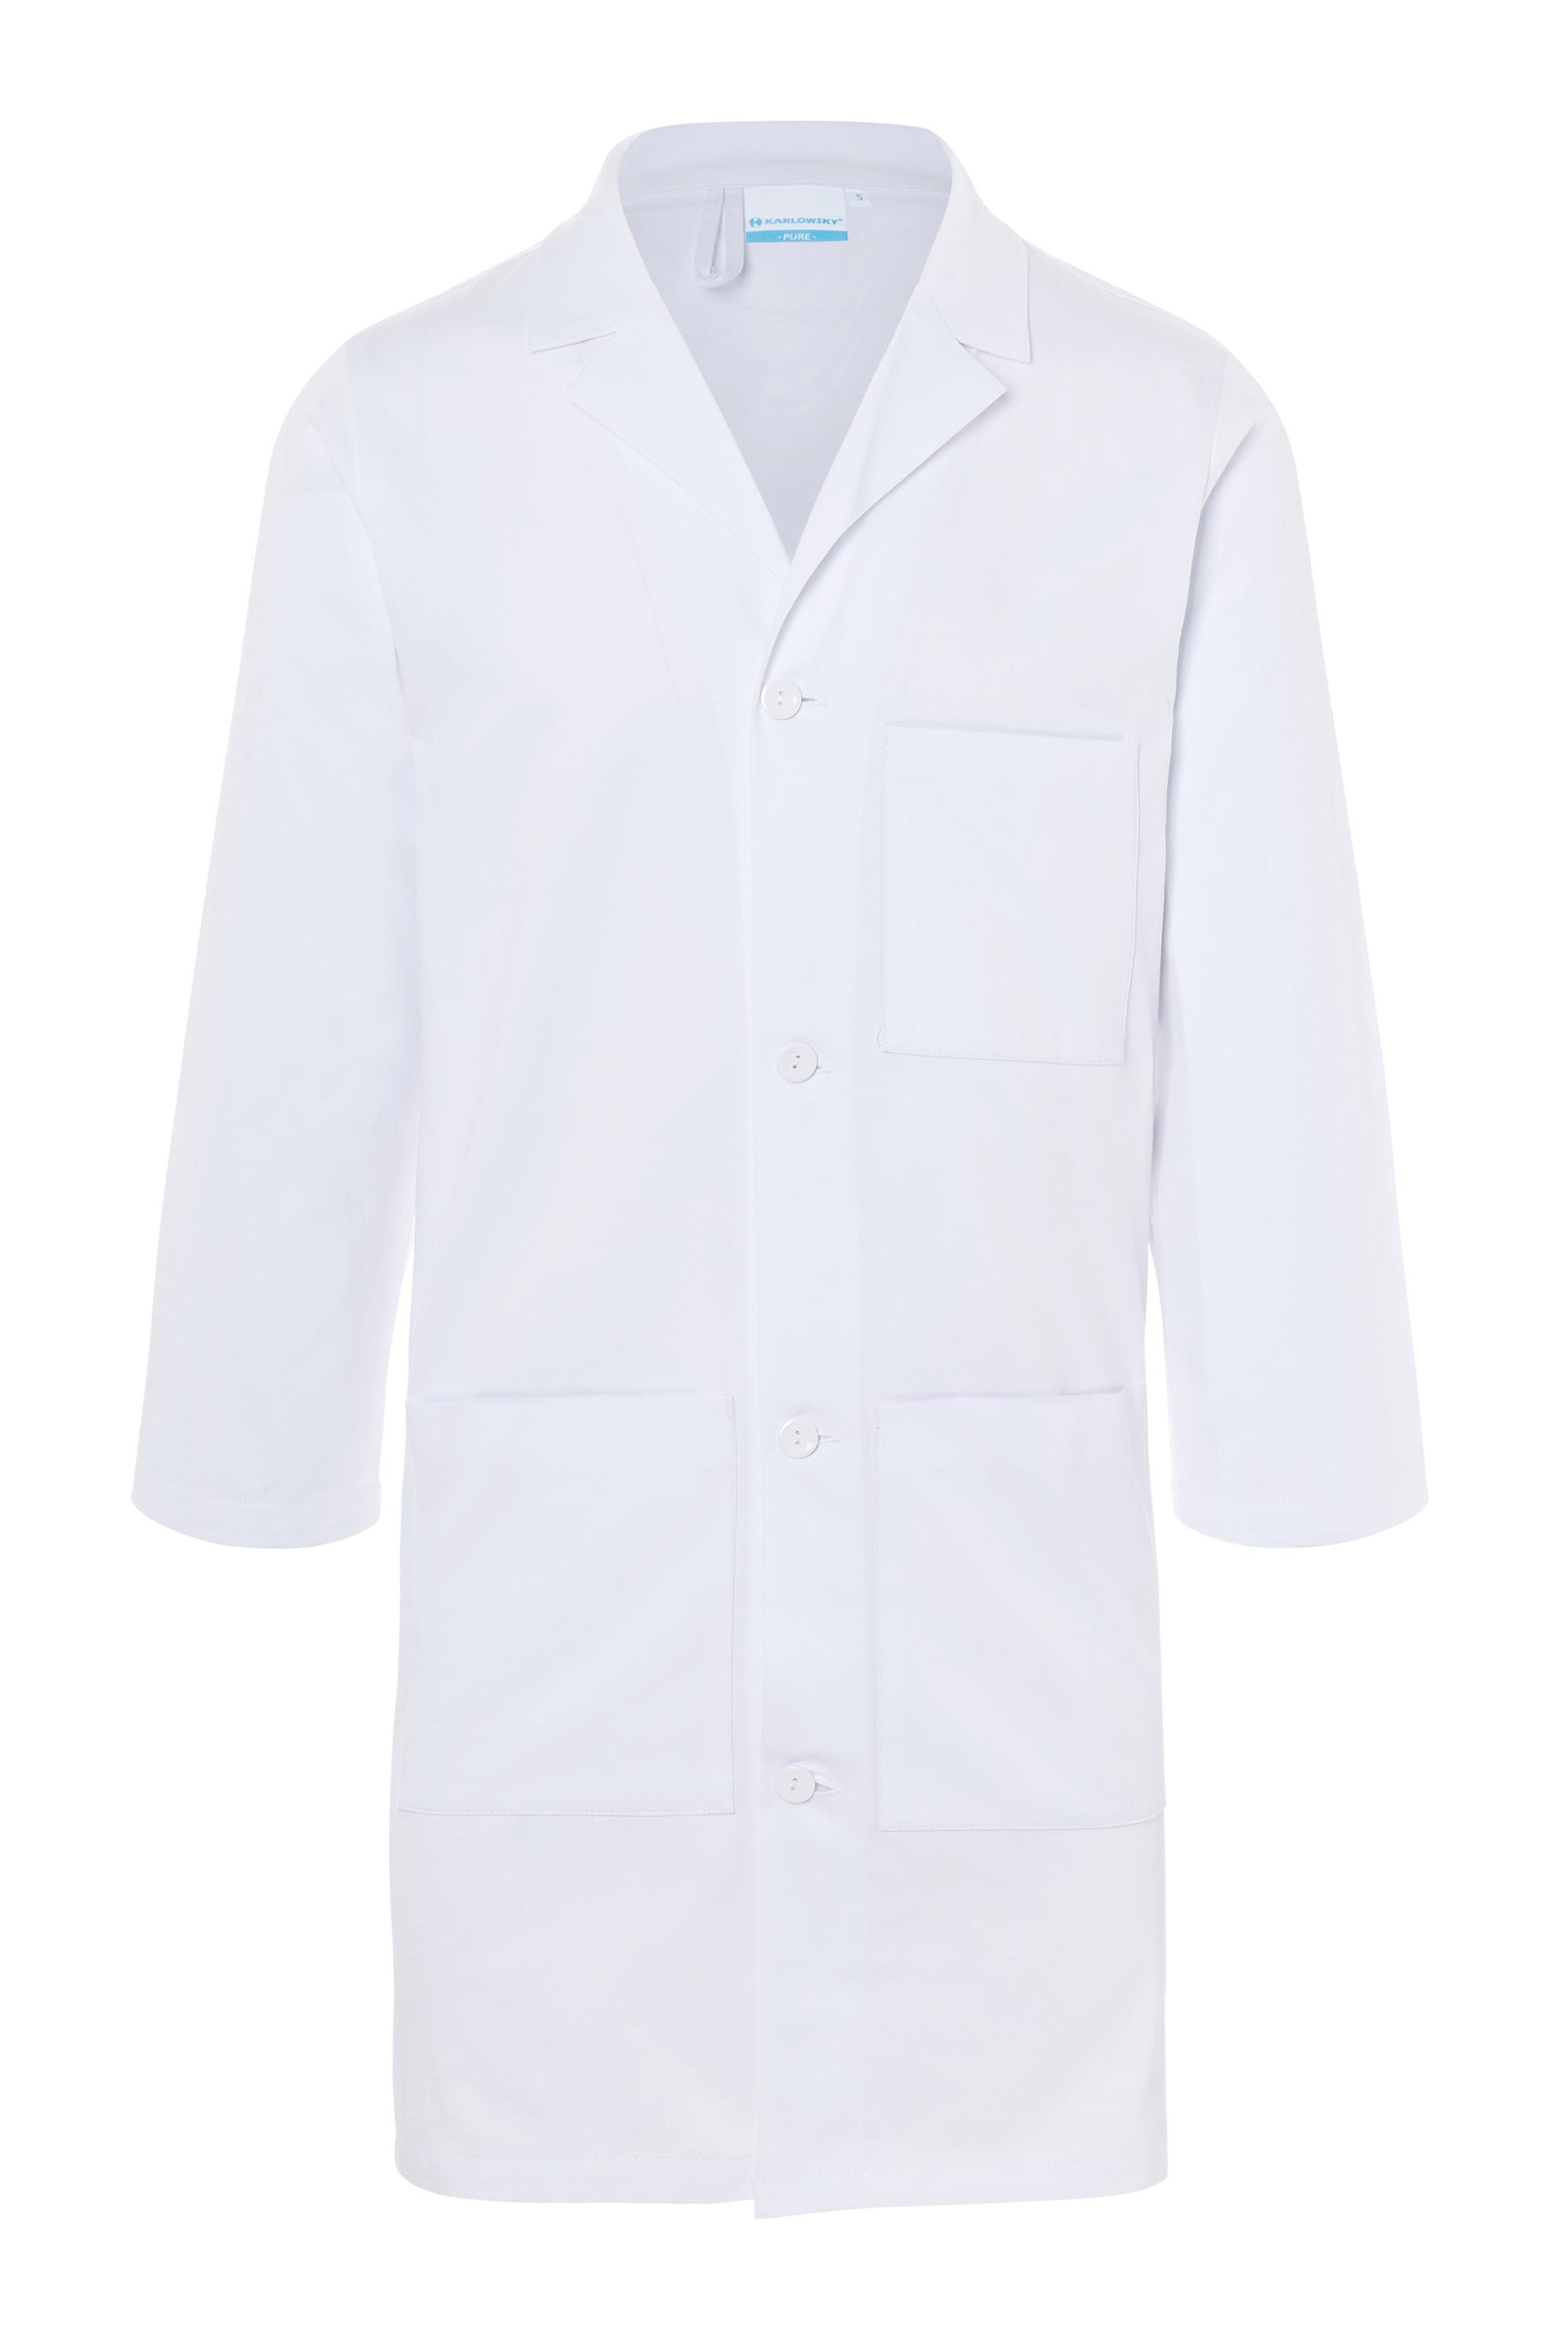 Men's lab coat cotton Karlowsky® white M (50)